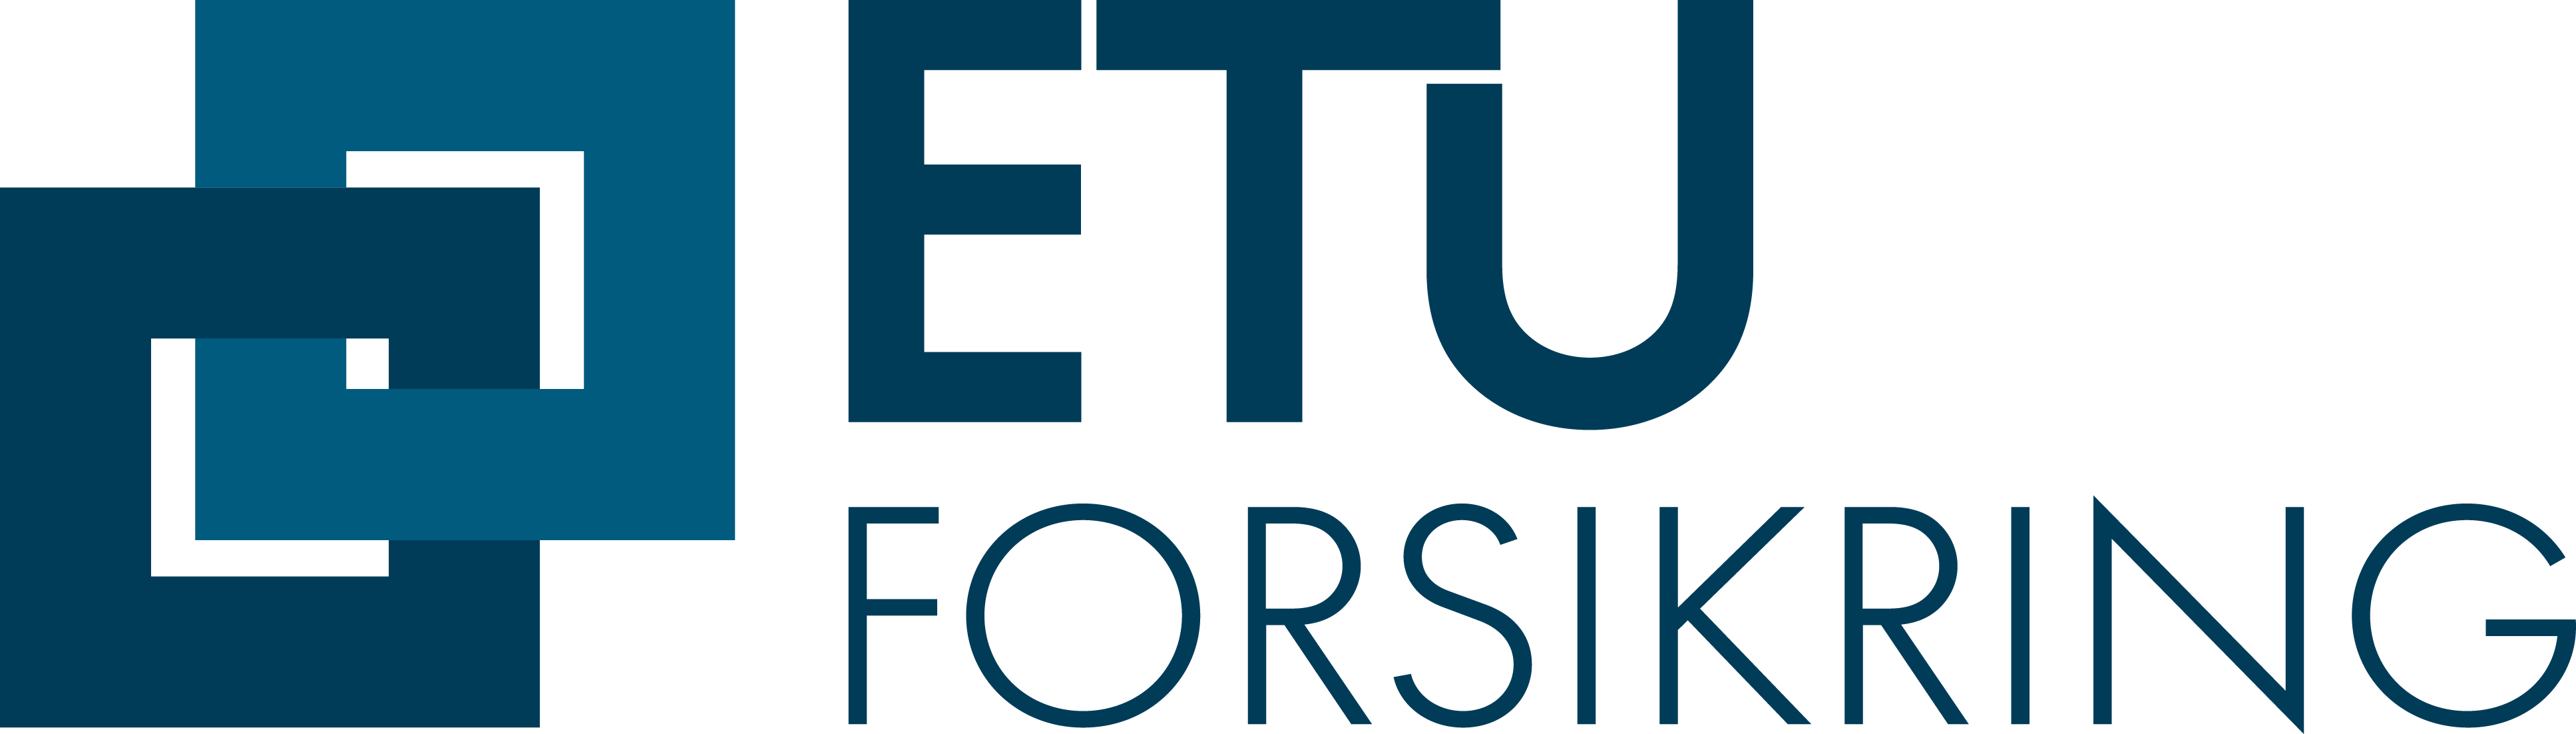 ETU logo BLUE